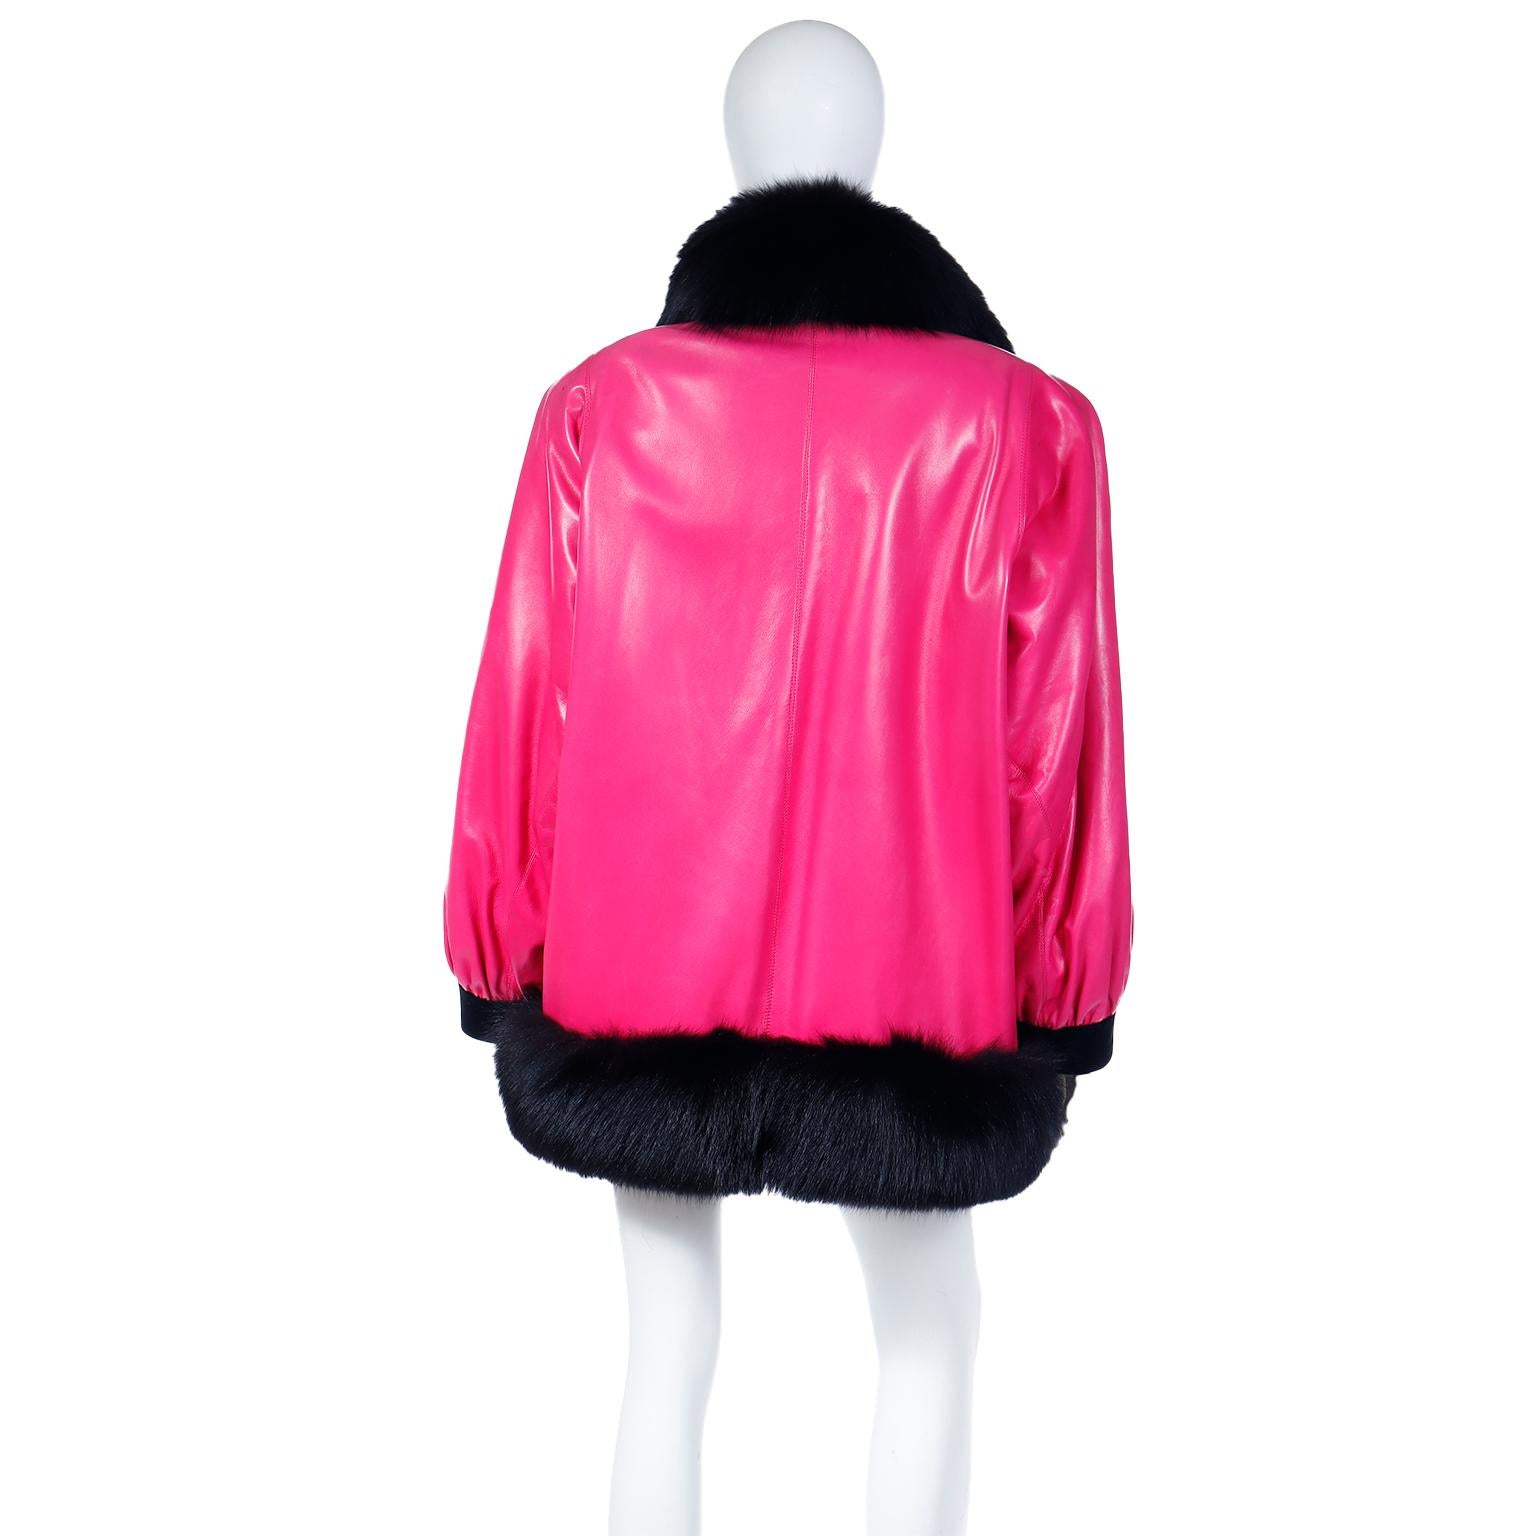 black jacket with pink fur